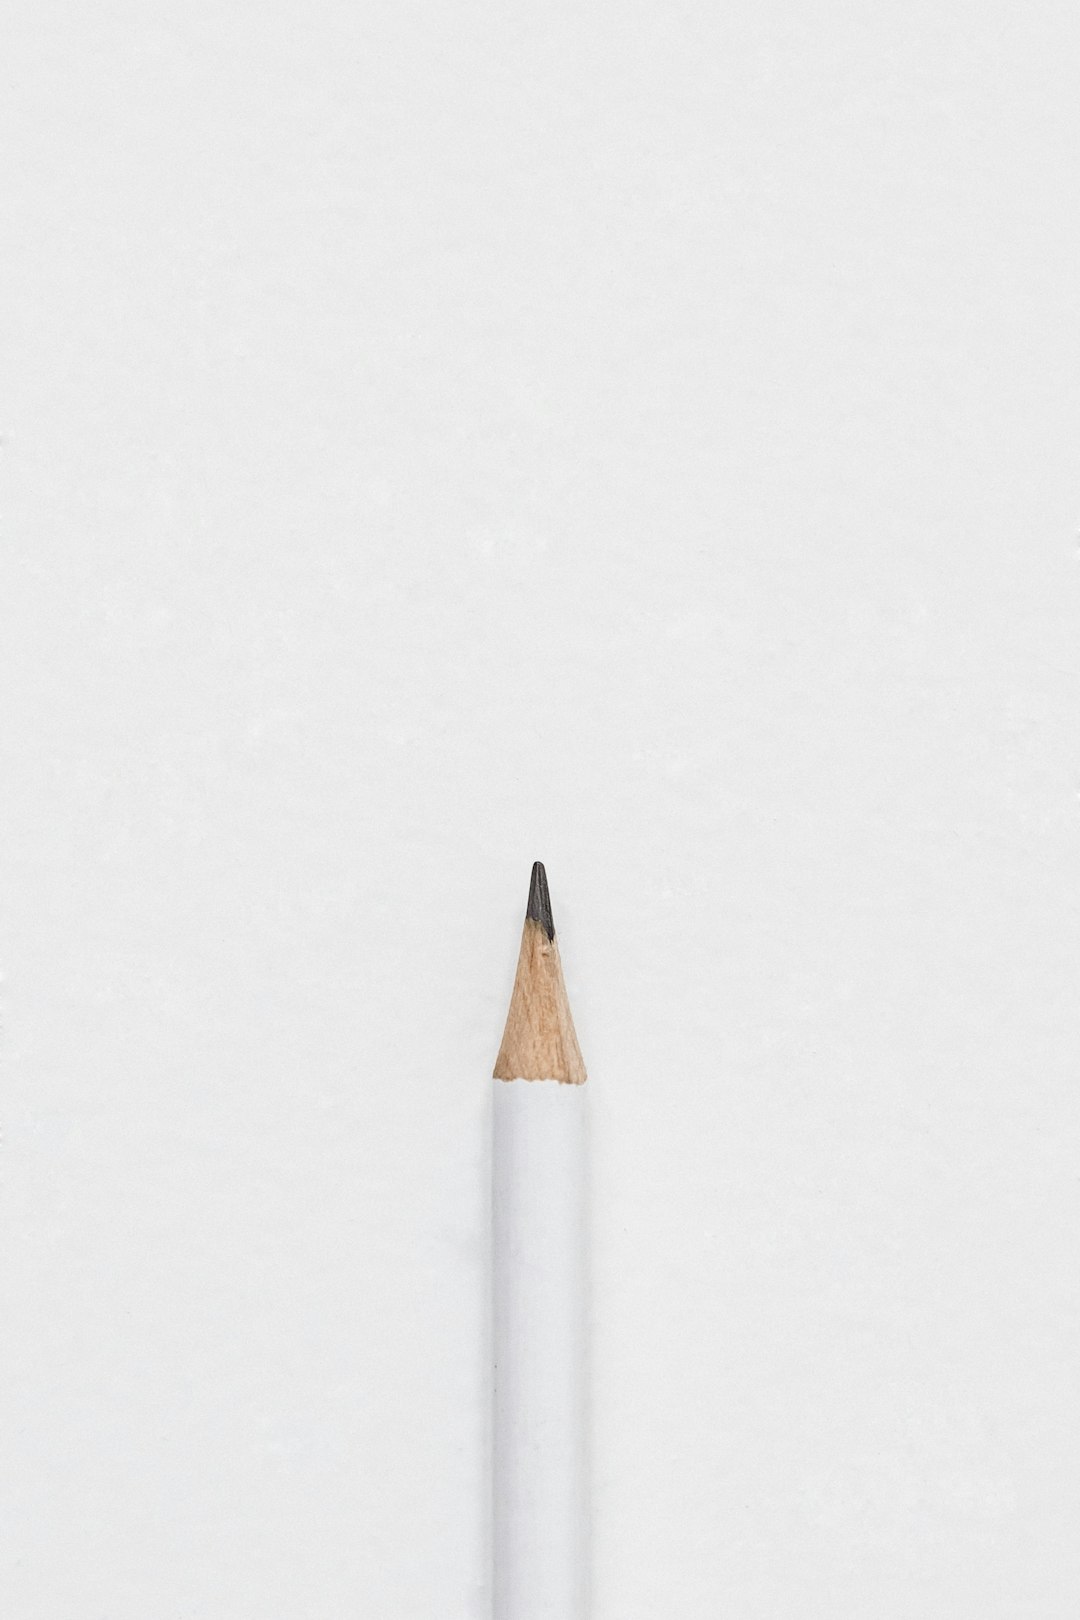 one minimalist pencil